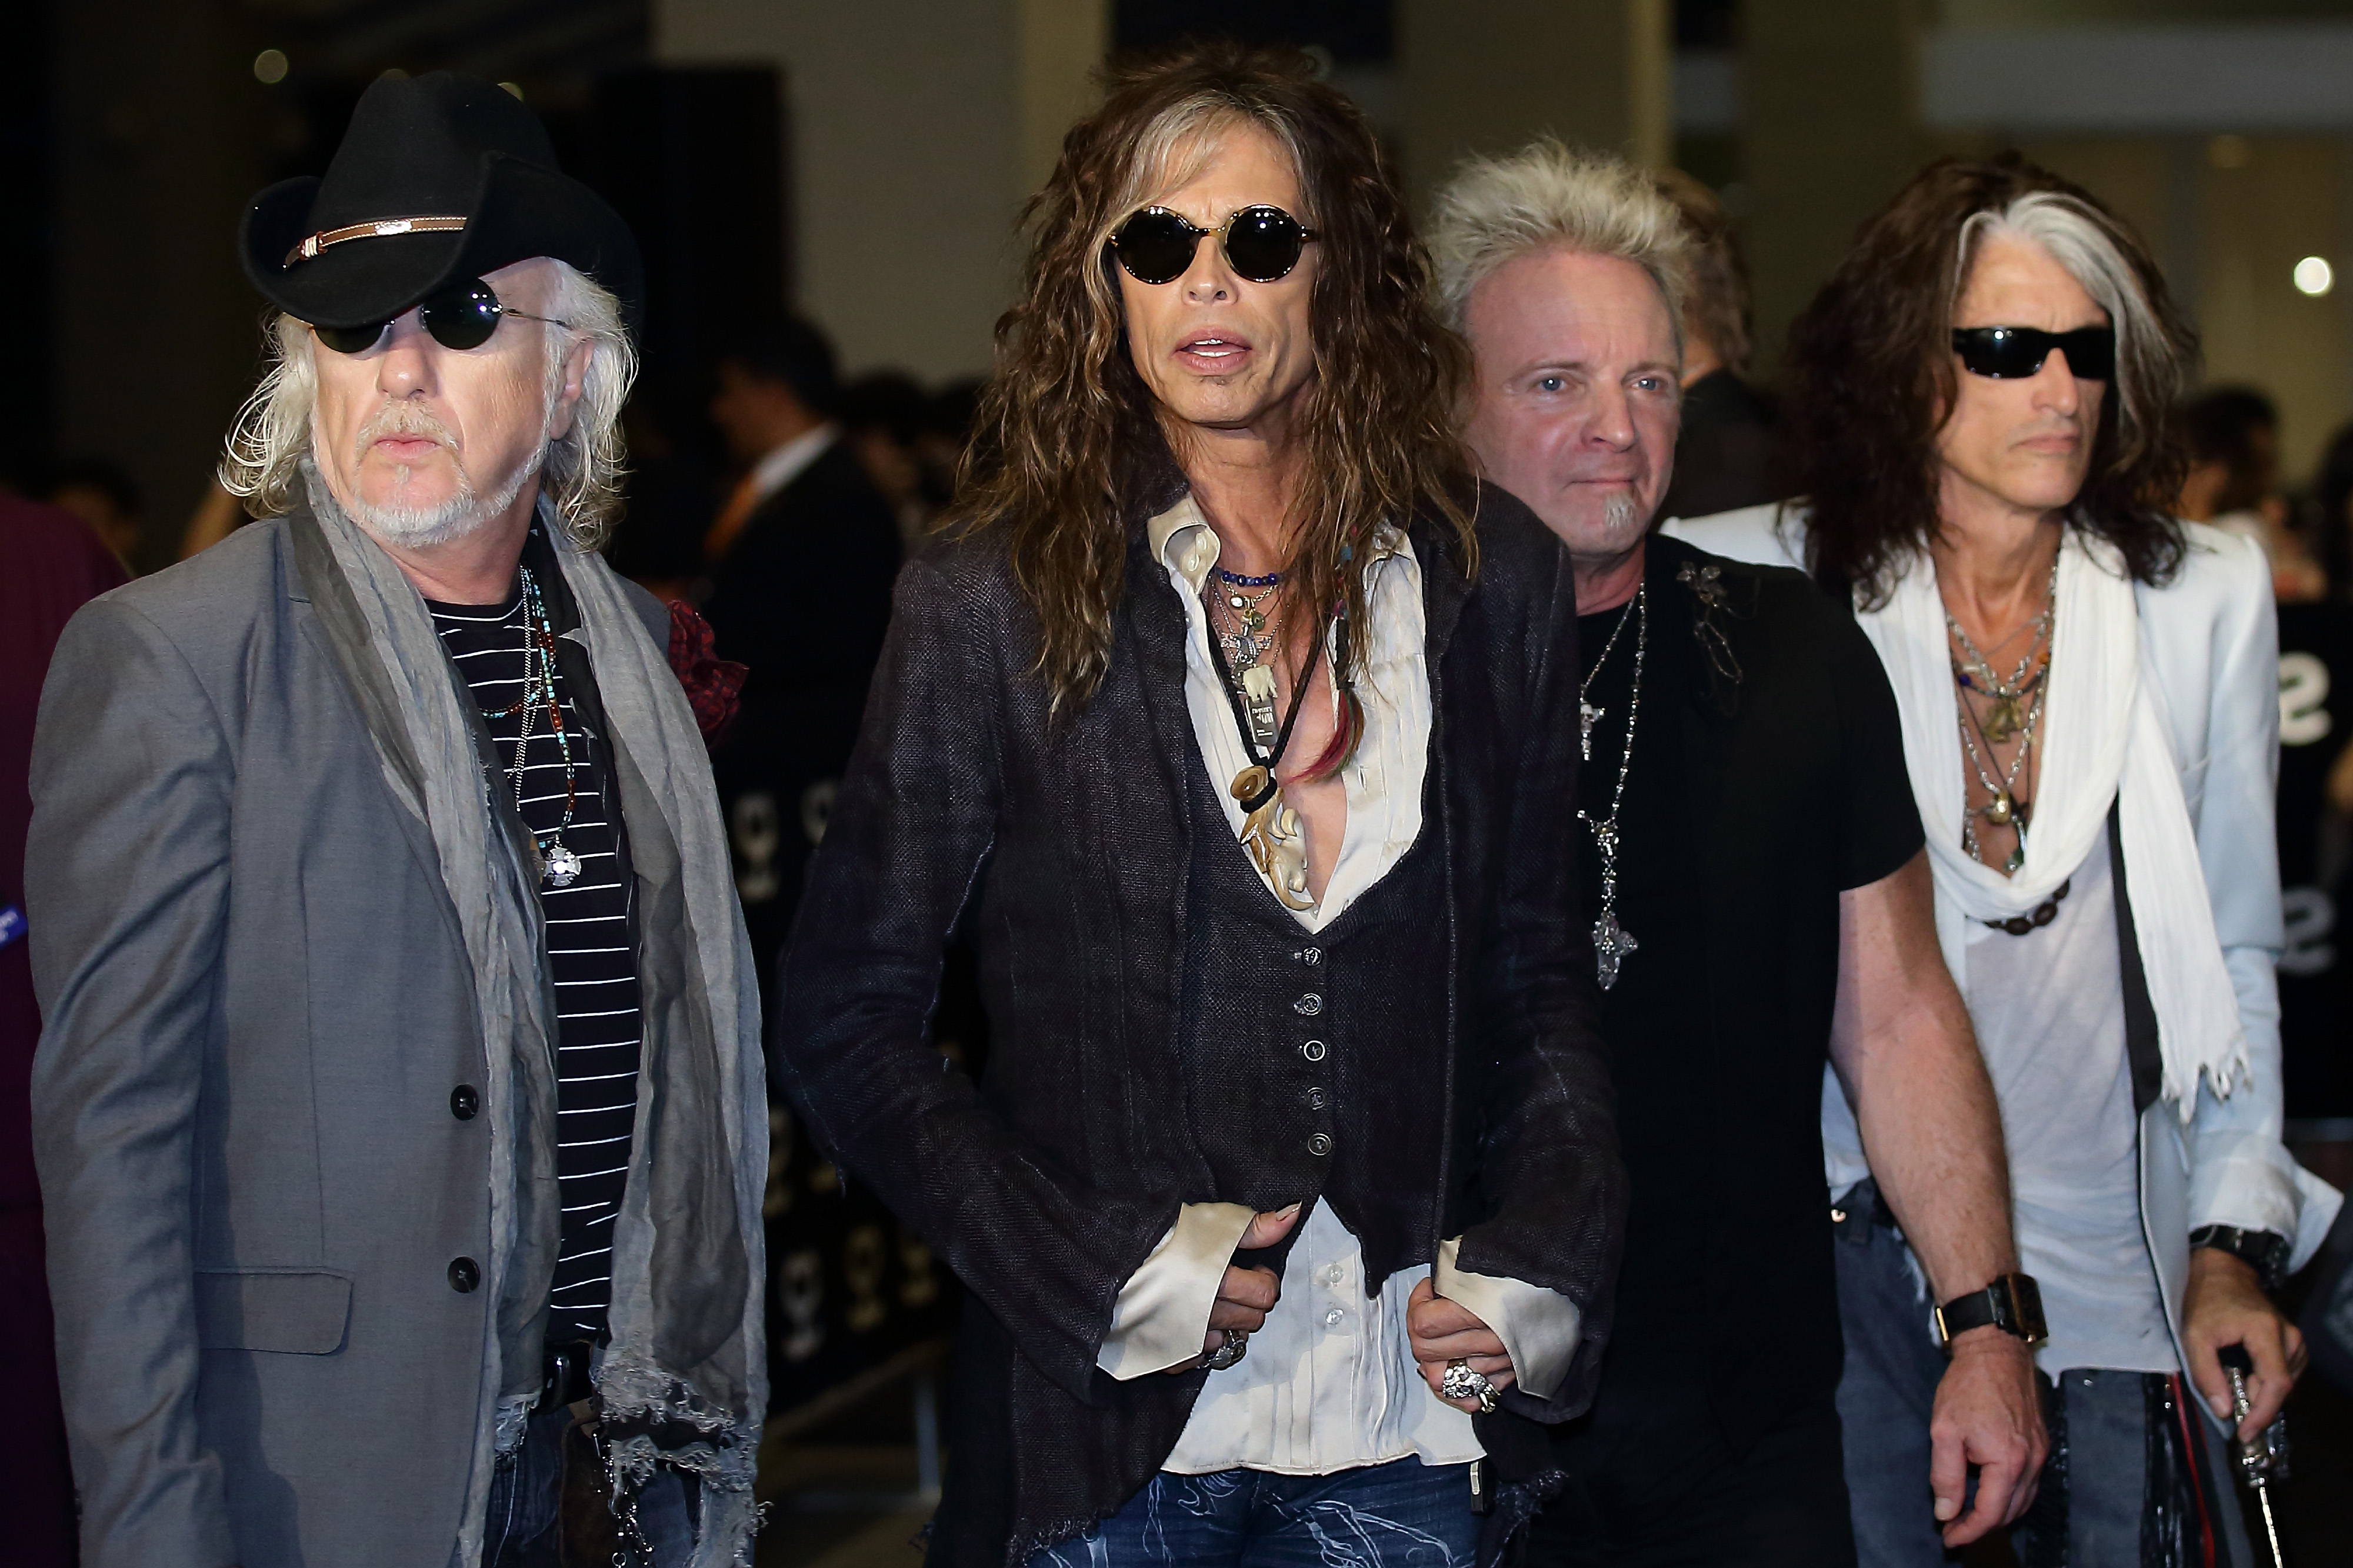 Aerosmith announces farewell tour starting in September, coming to Boston  on New Year's Eve - CBS Boston